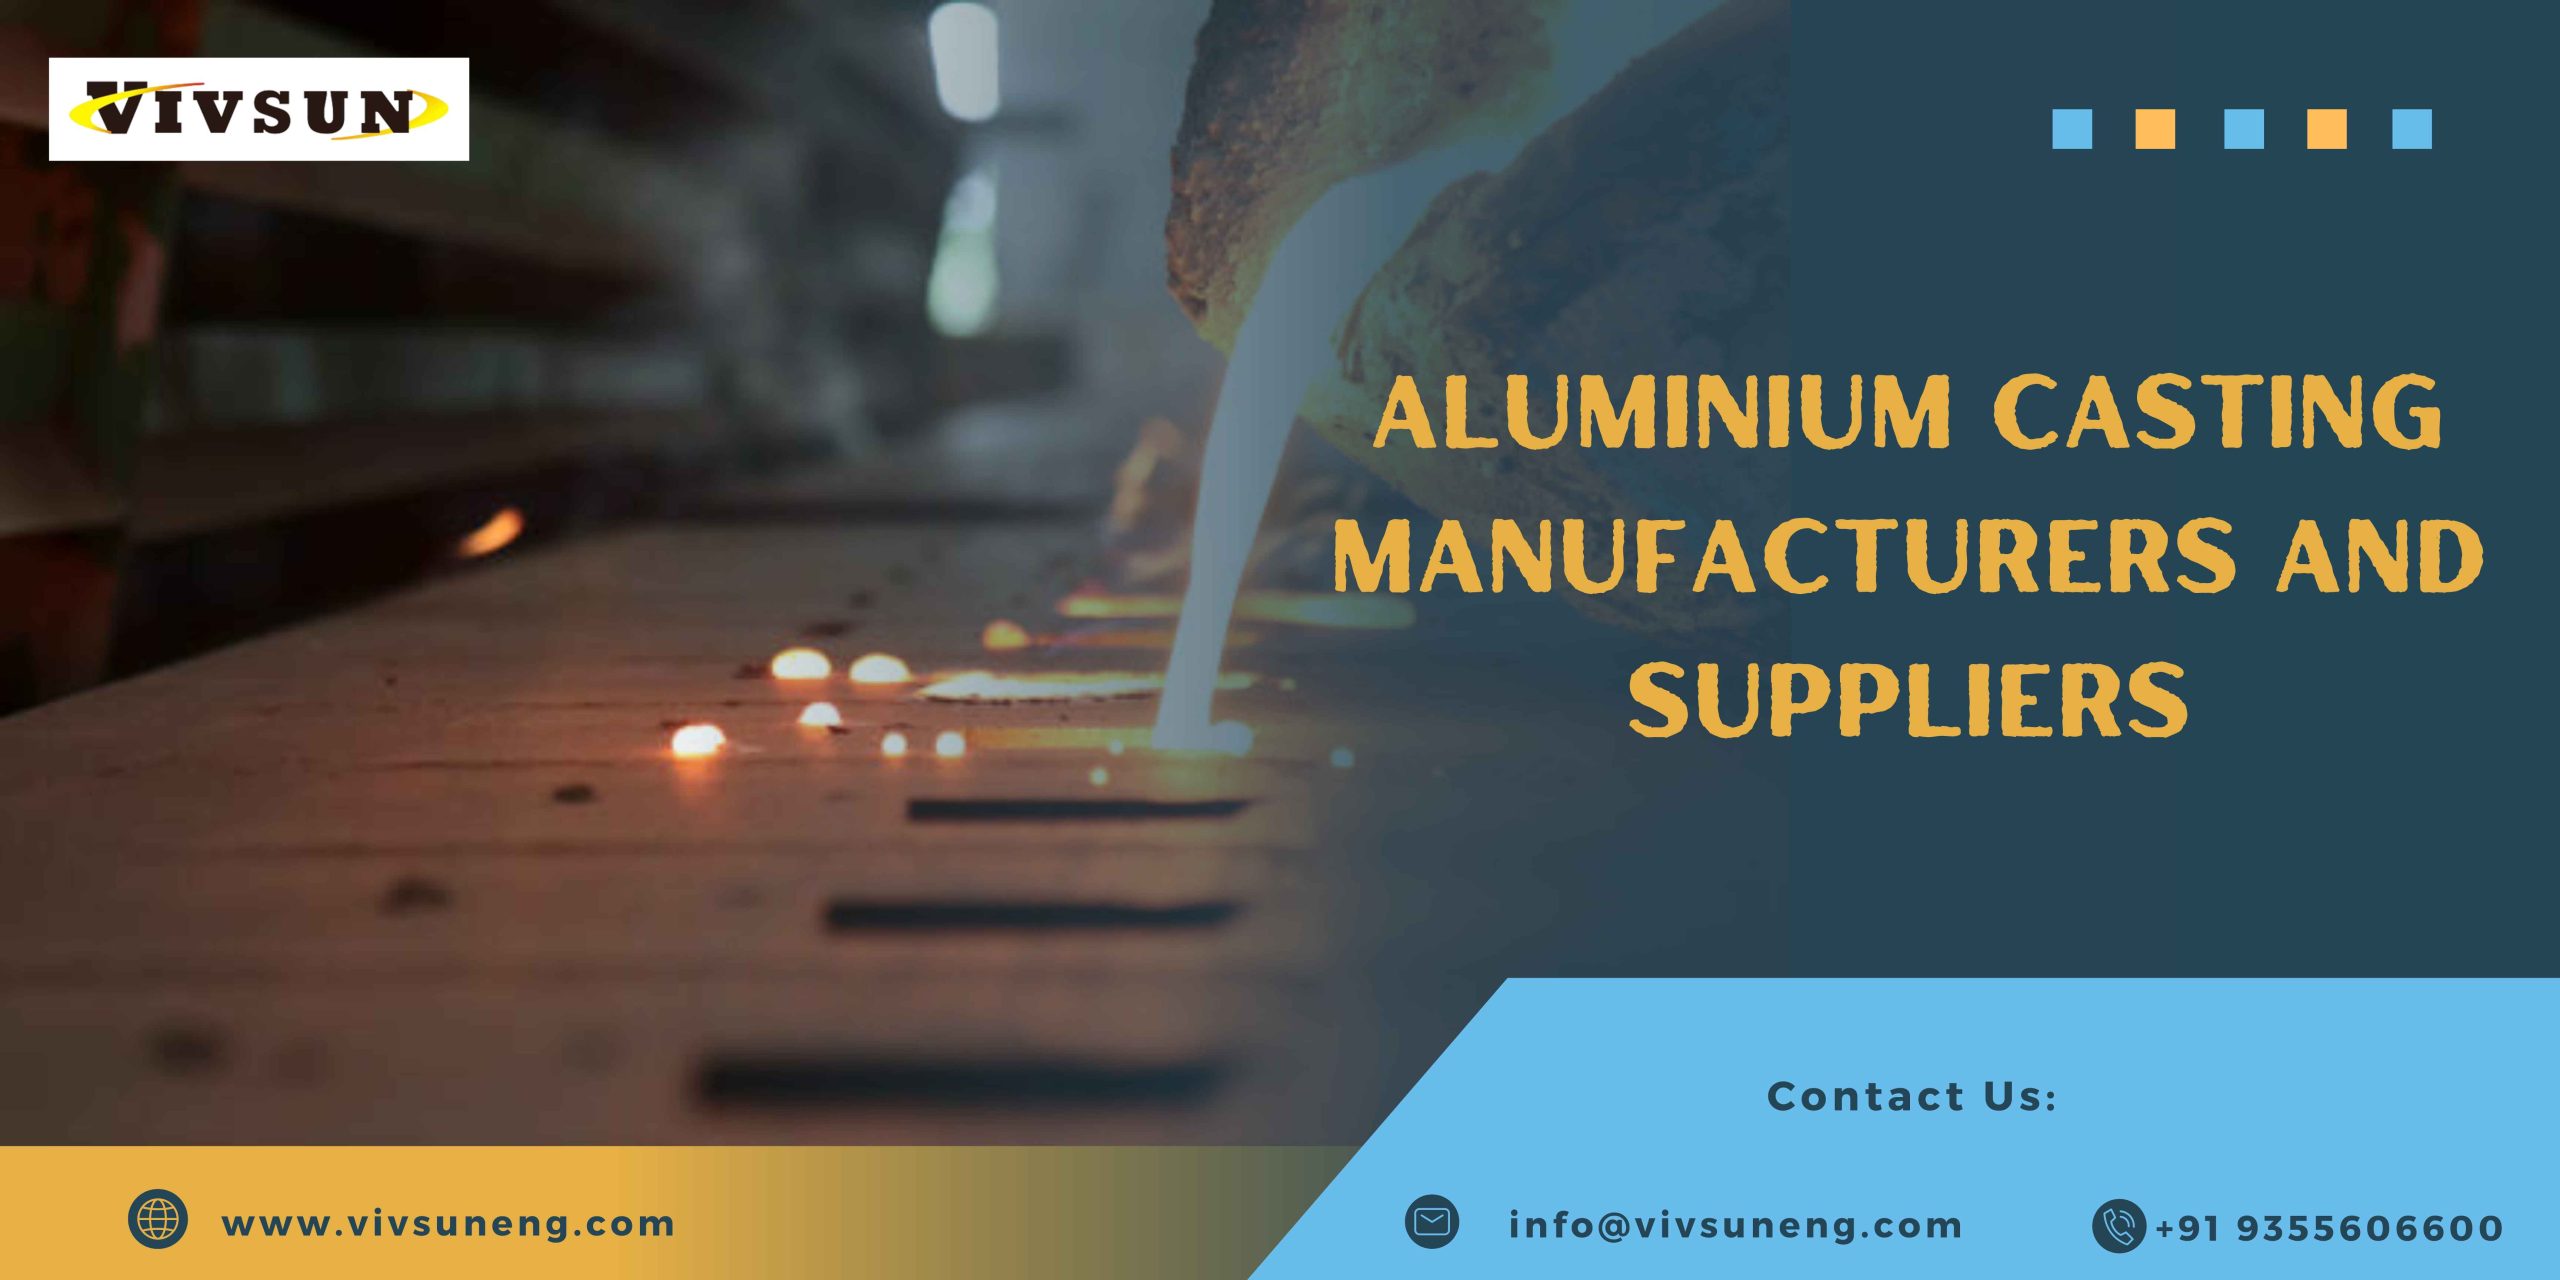 Aluminium casting manufacturers and suppliers